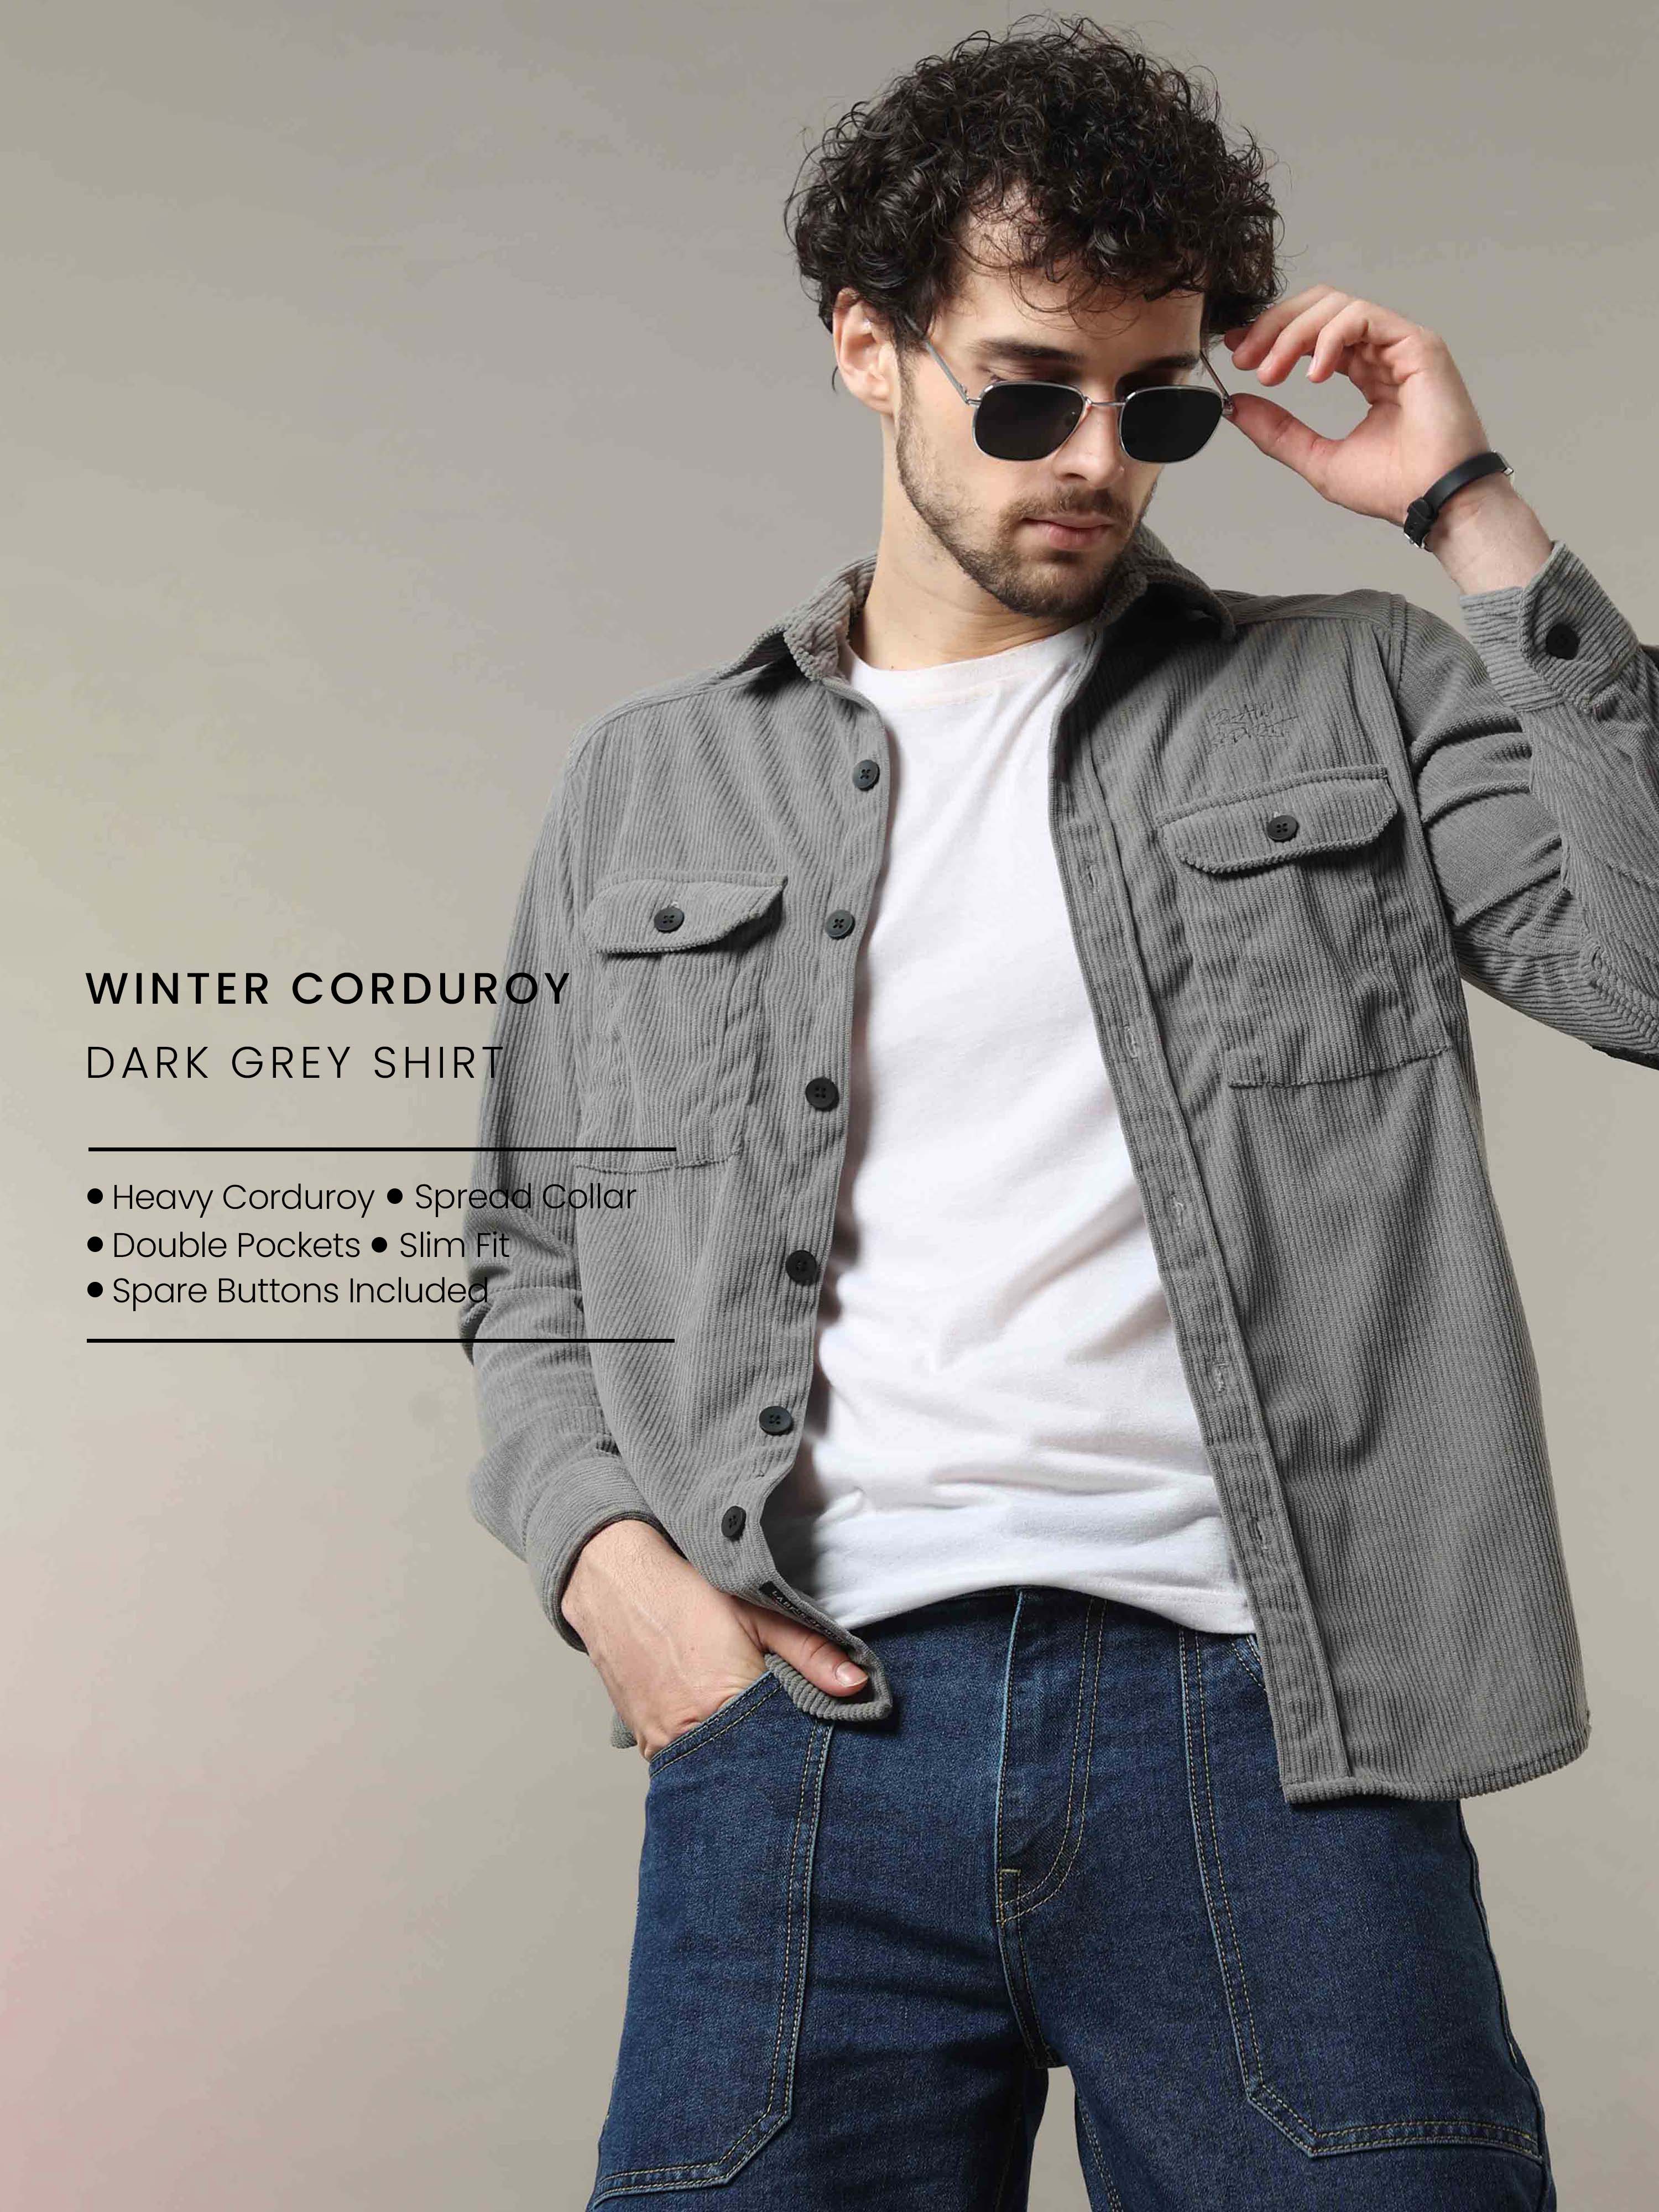 Buy Latest Dark Grey Corduroy Shirts Mens IndiaRs. 1499.00